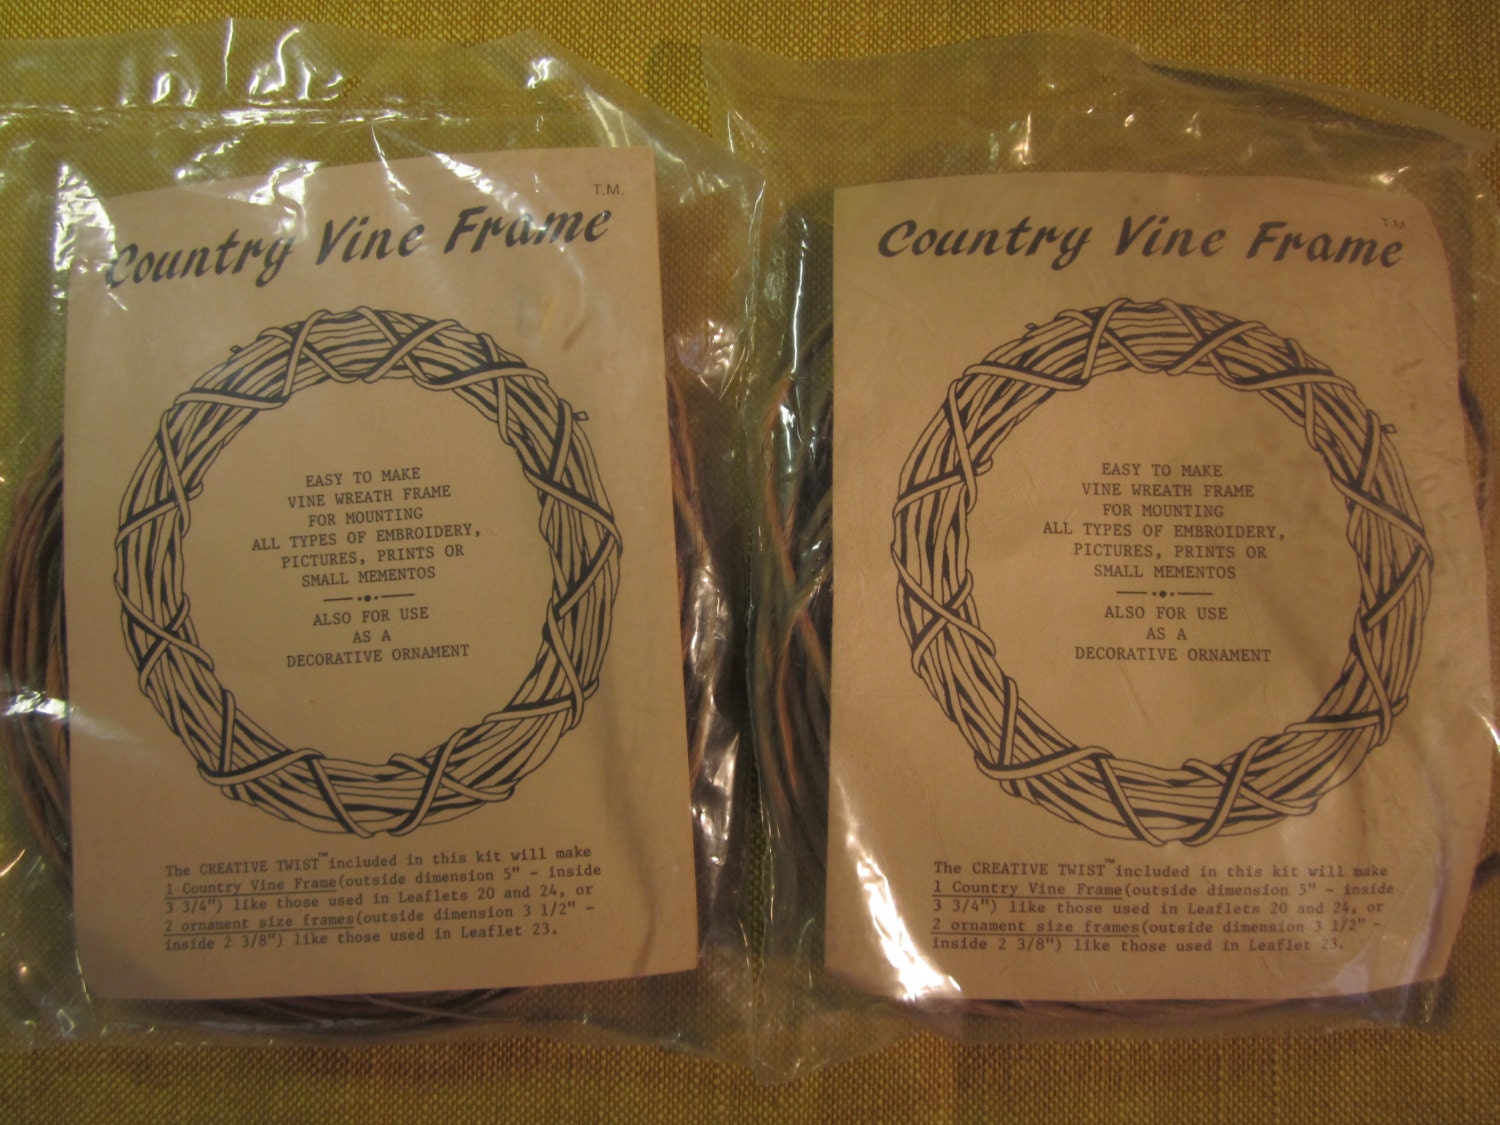 Country Onion Basket Weaving Kit